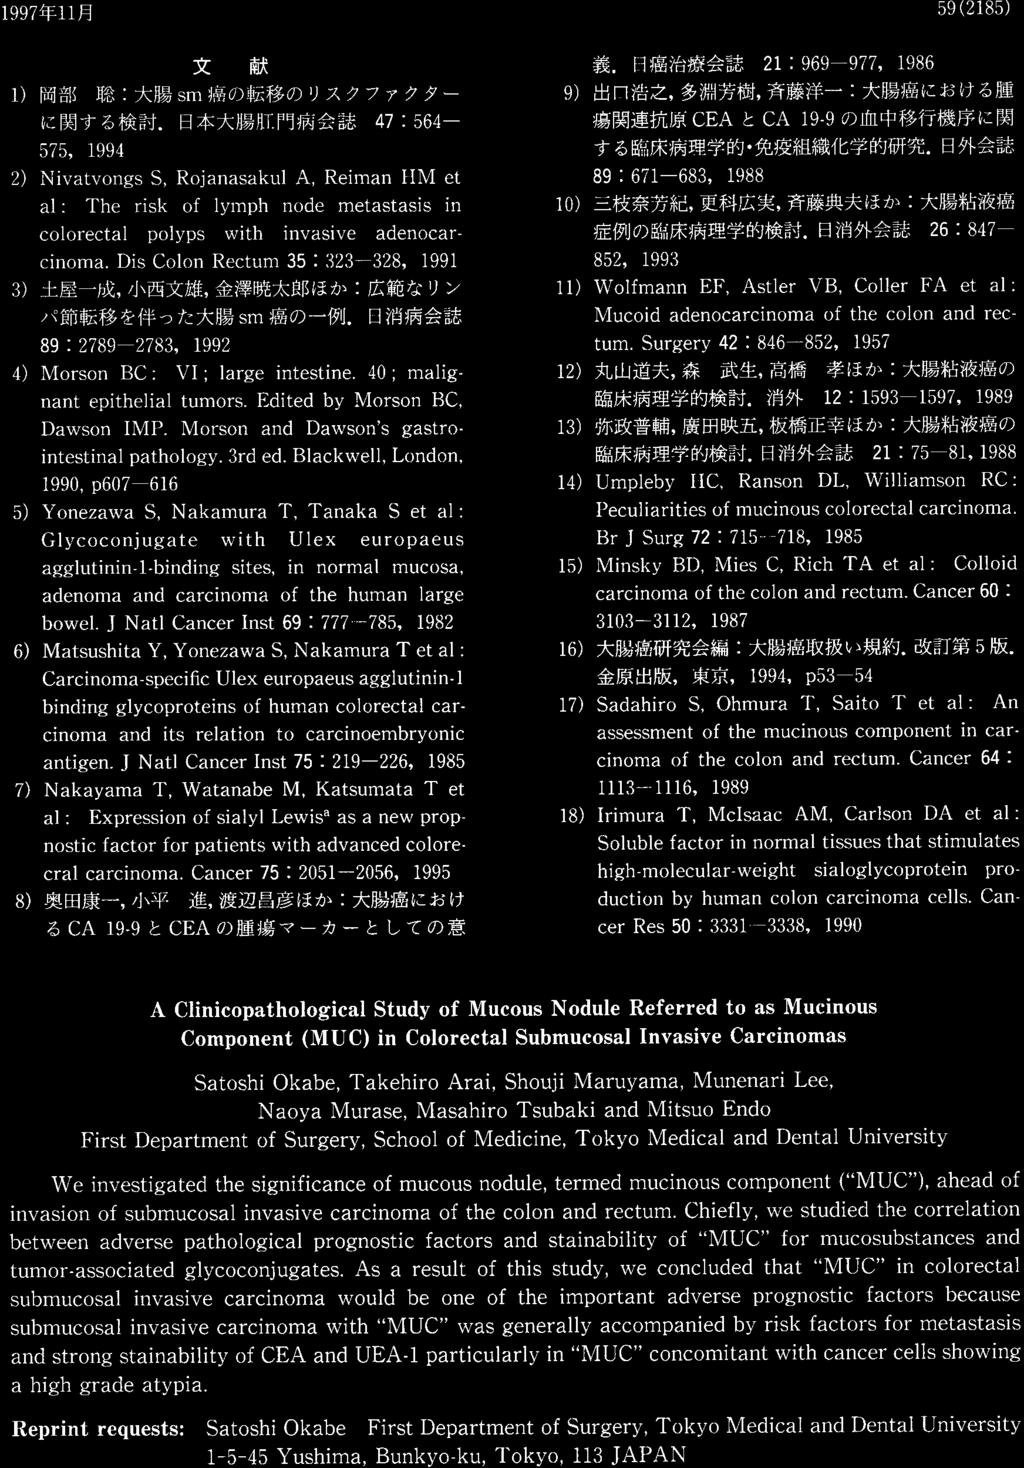 A Clinicopathological Study of Mucous Nodule Referred to as Mucinous Component (MUC) in Colorectal Submucosal Invasive Carcinomas Satoshi Okabe, Takehiro Arai, Shouji Maruyama, Munenari Lee, Naoya